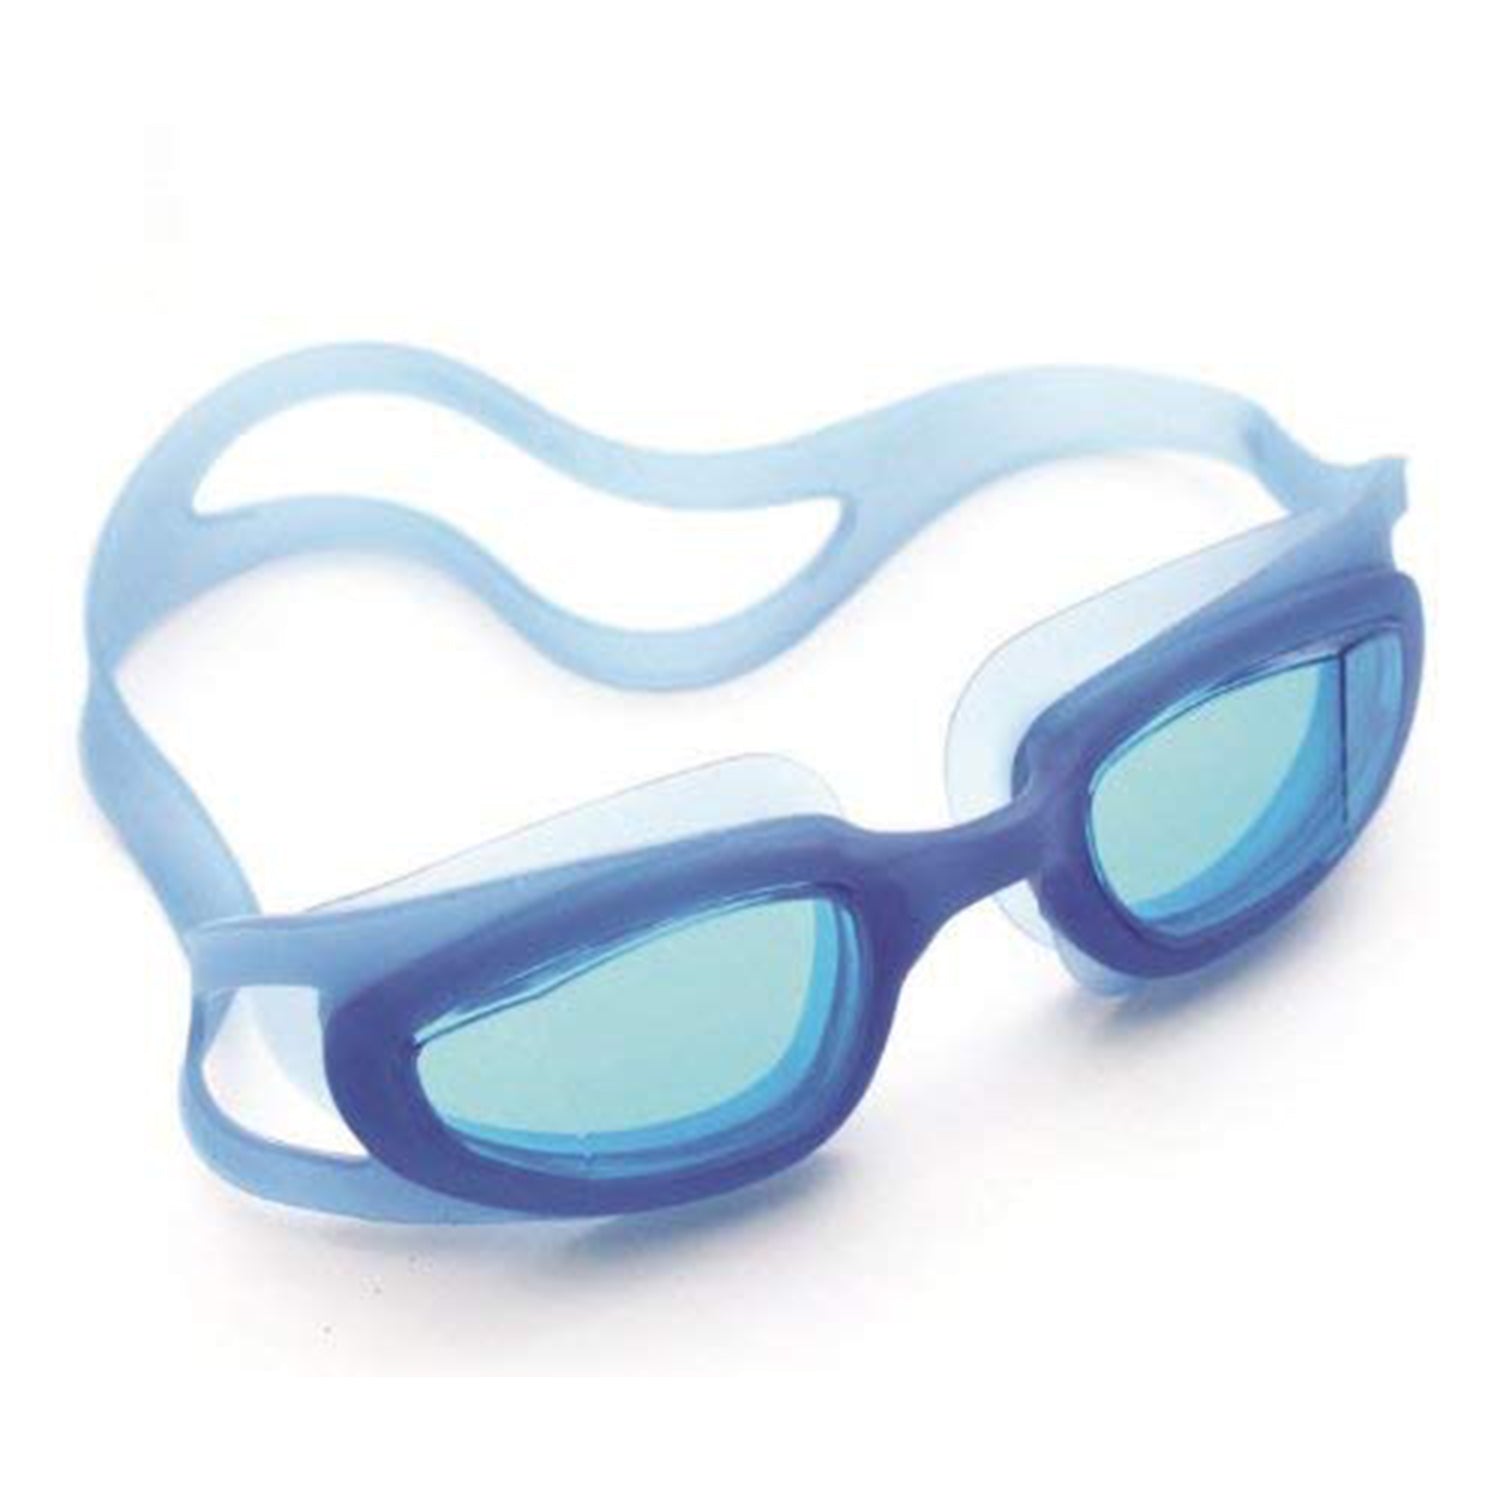 Sports High Performance Swimming Goggle, Blue - Best Price online Prokicksports.com